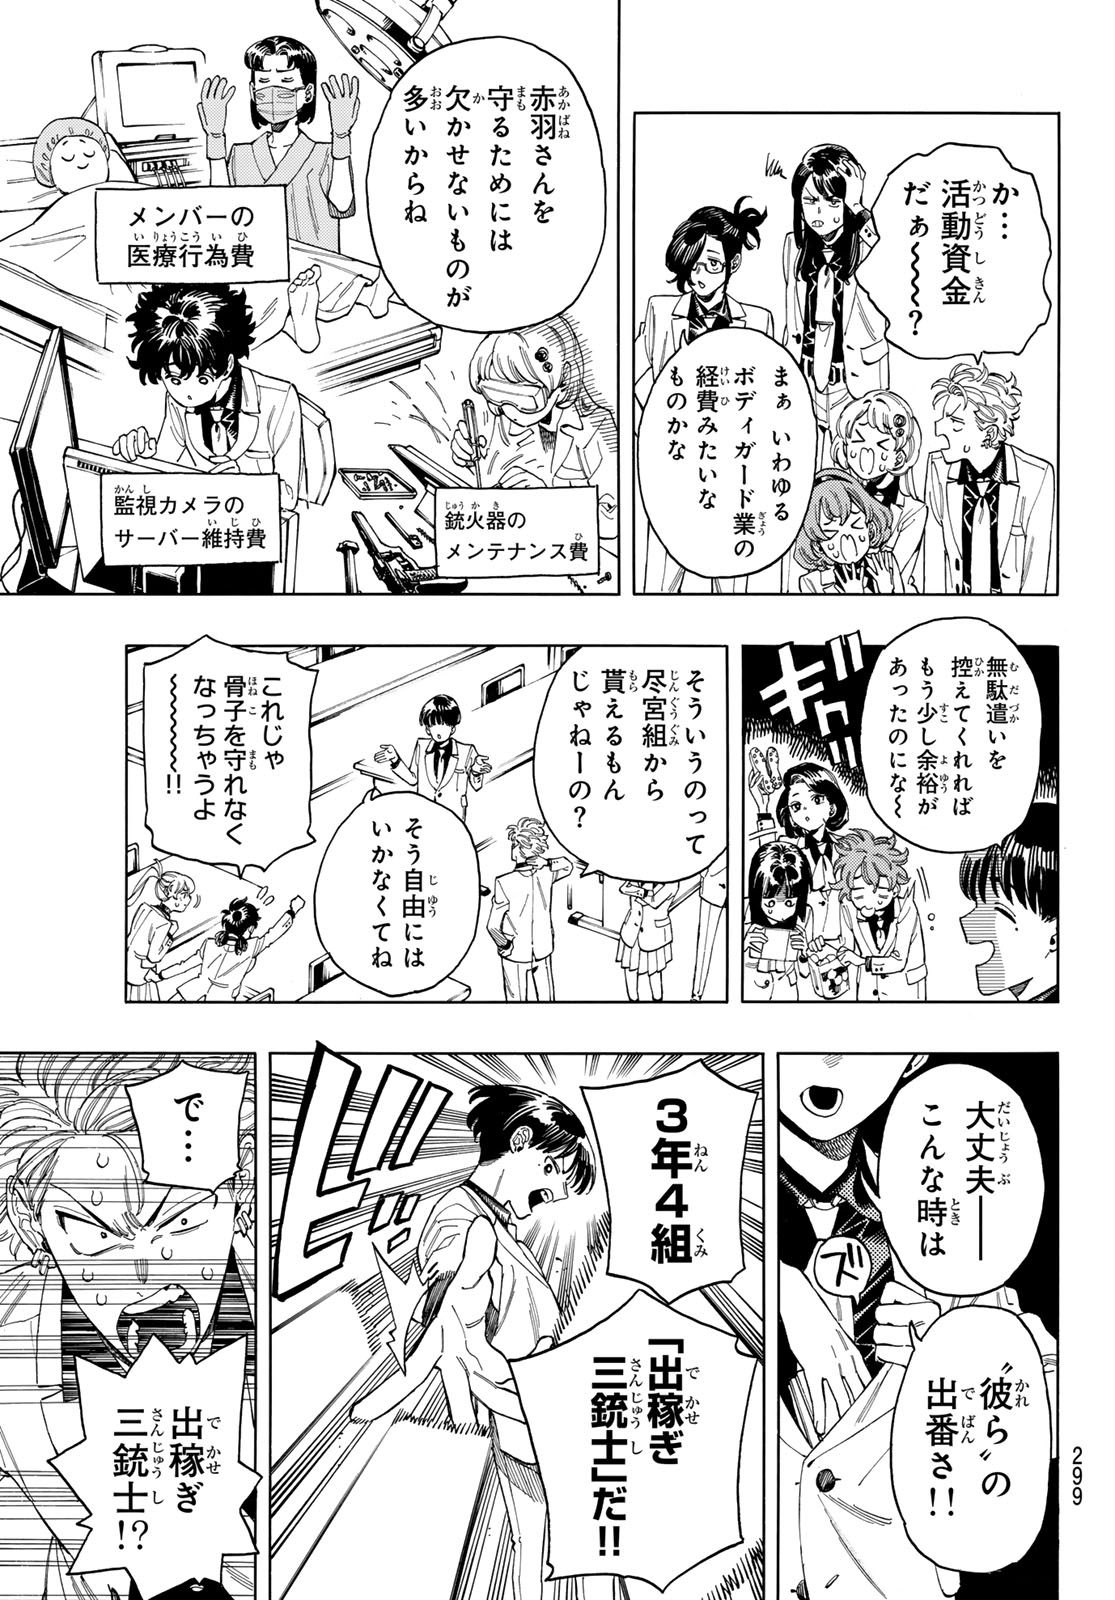 Akabane Honeko no Bodyguard - Chapter 82 - Page 3